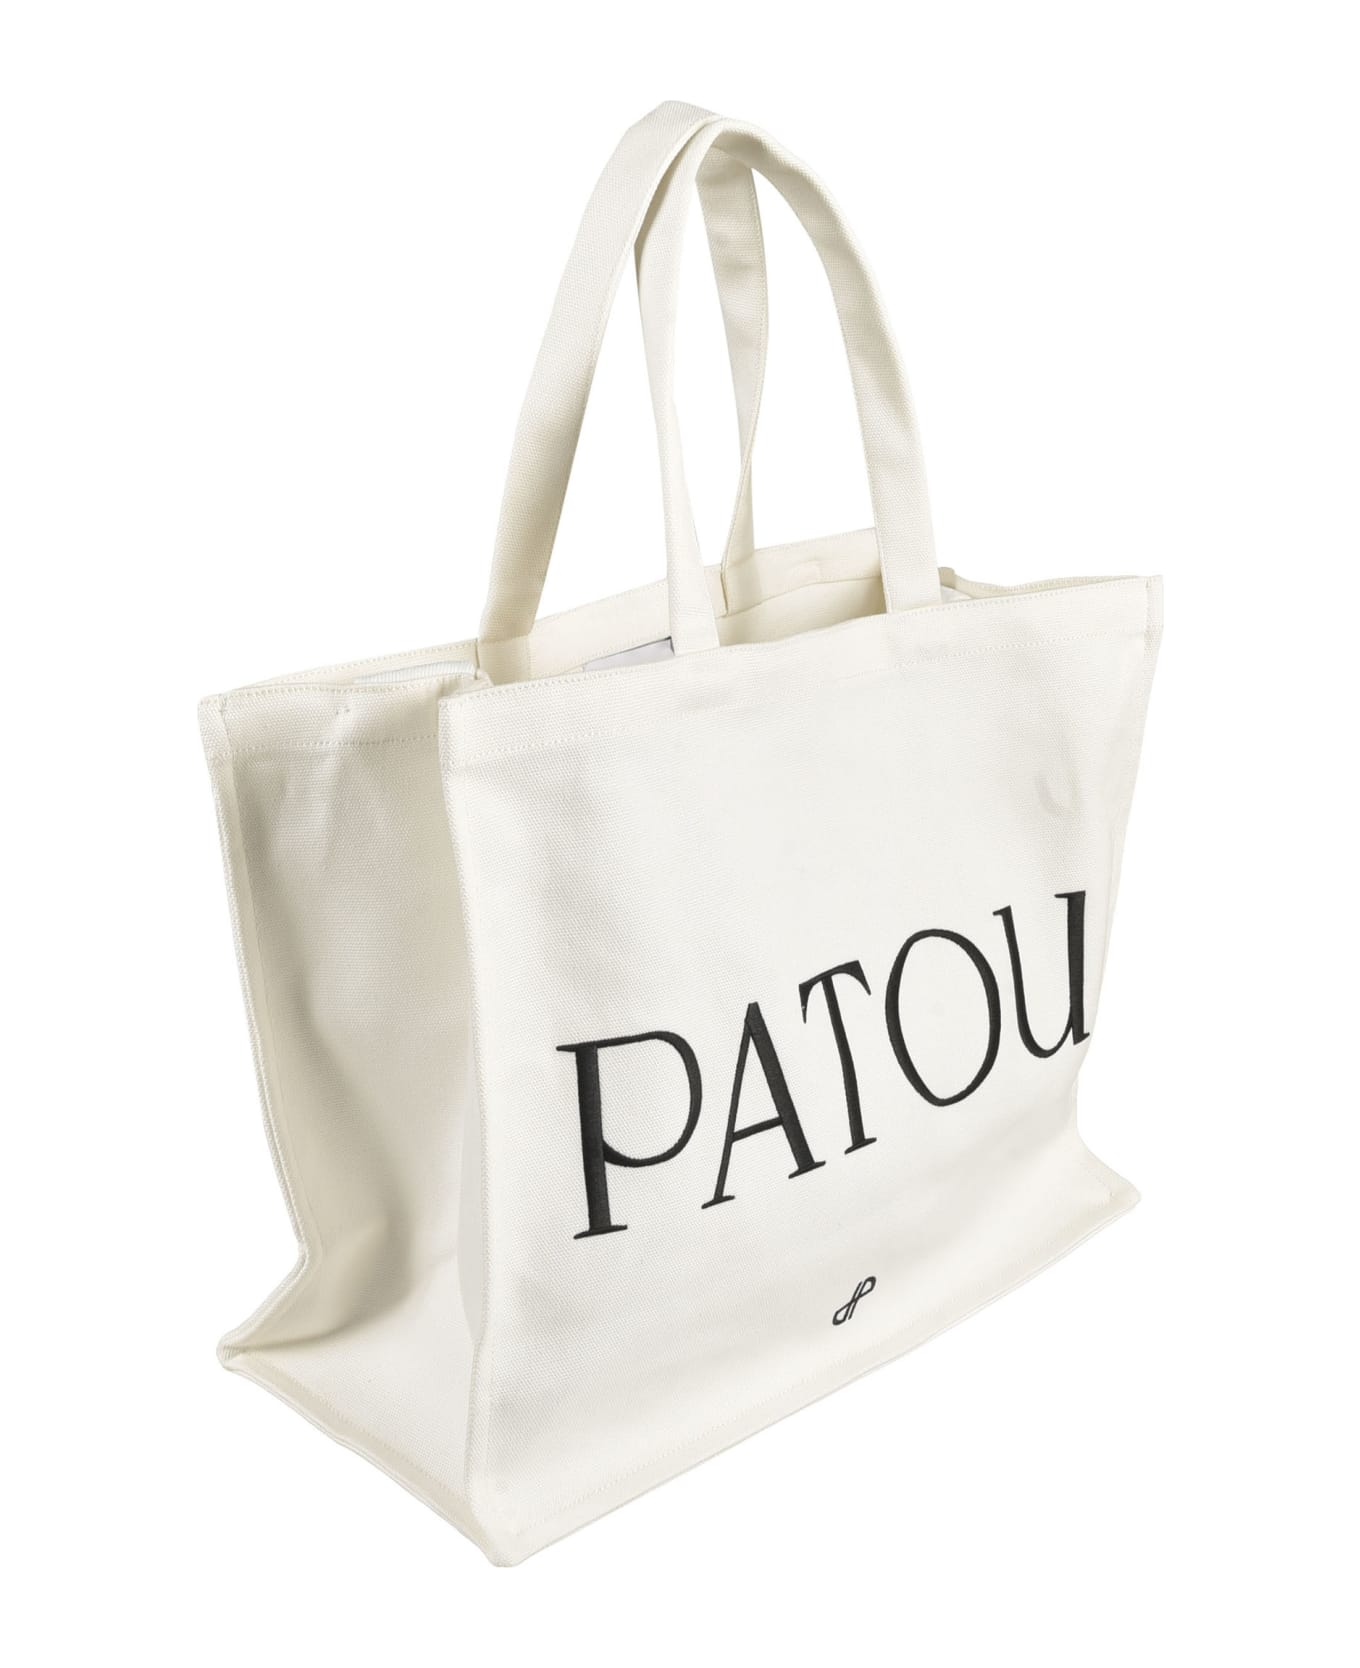 Patou Logo Large Tote - WHITE